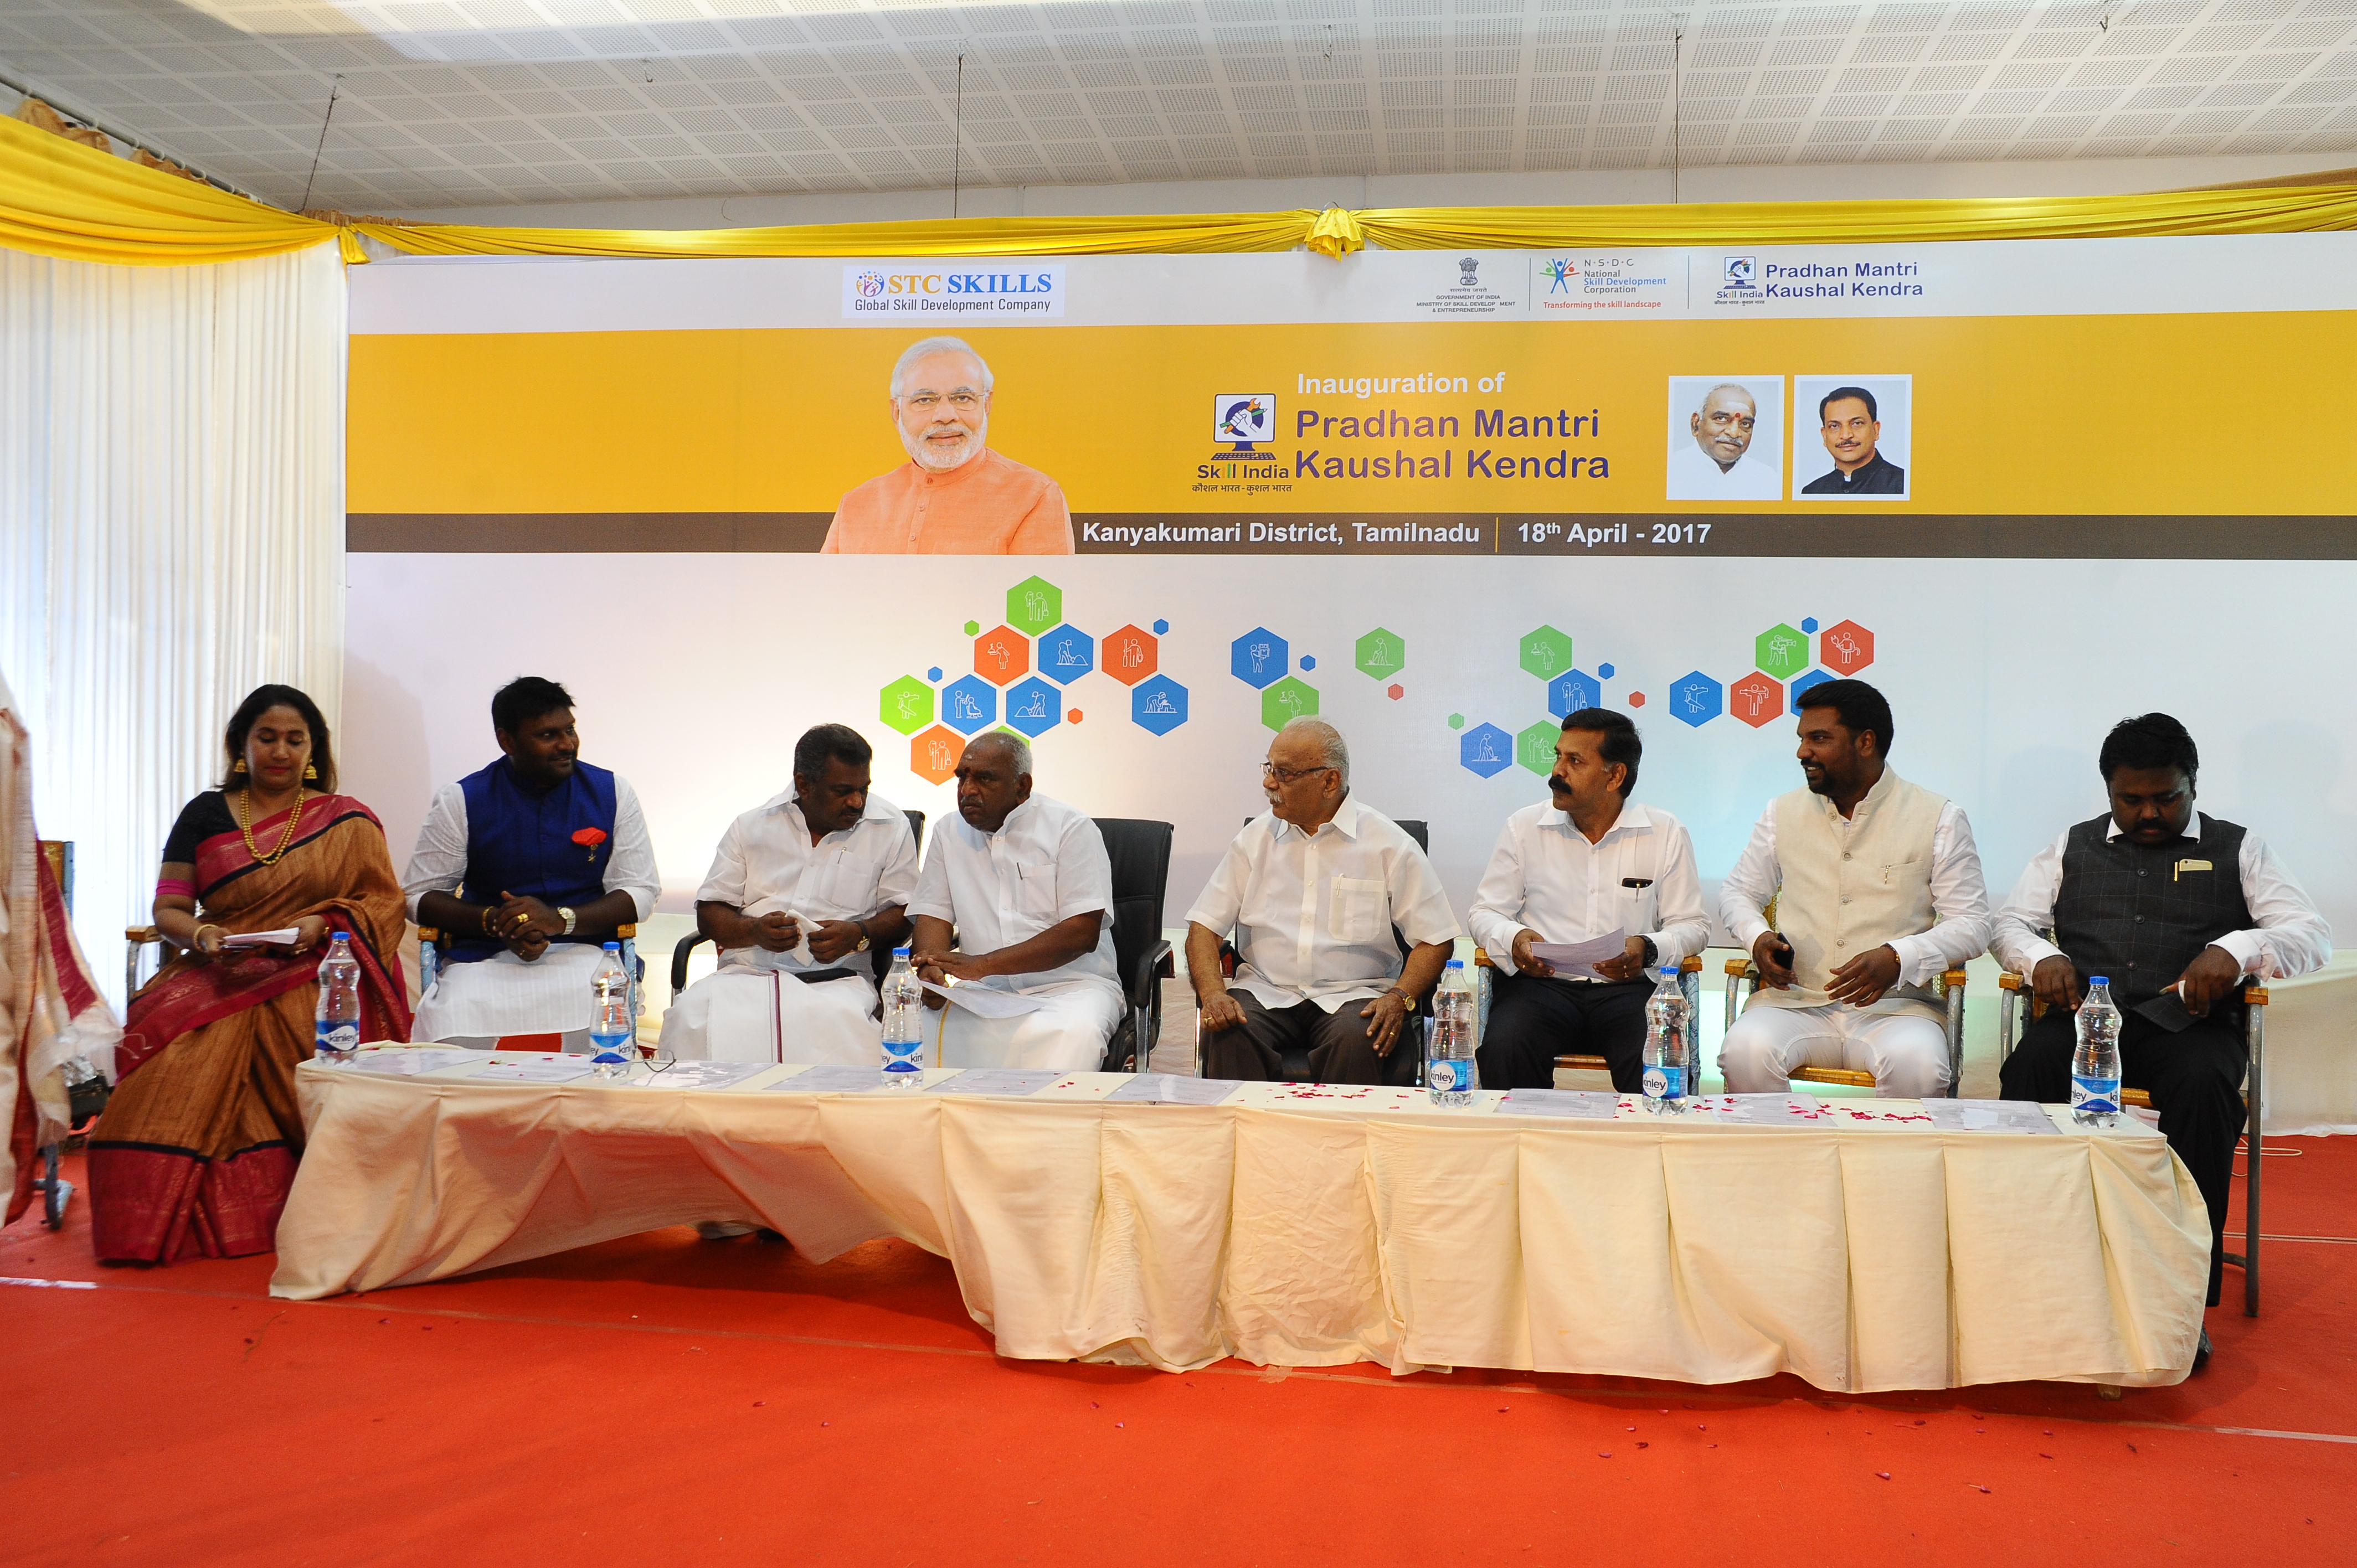 Blog Archive STC Skills launches its first PMKK center at Nagercoil, TamilNadu STC Skills photo